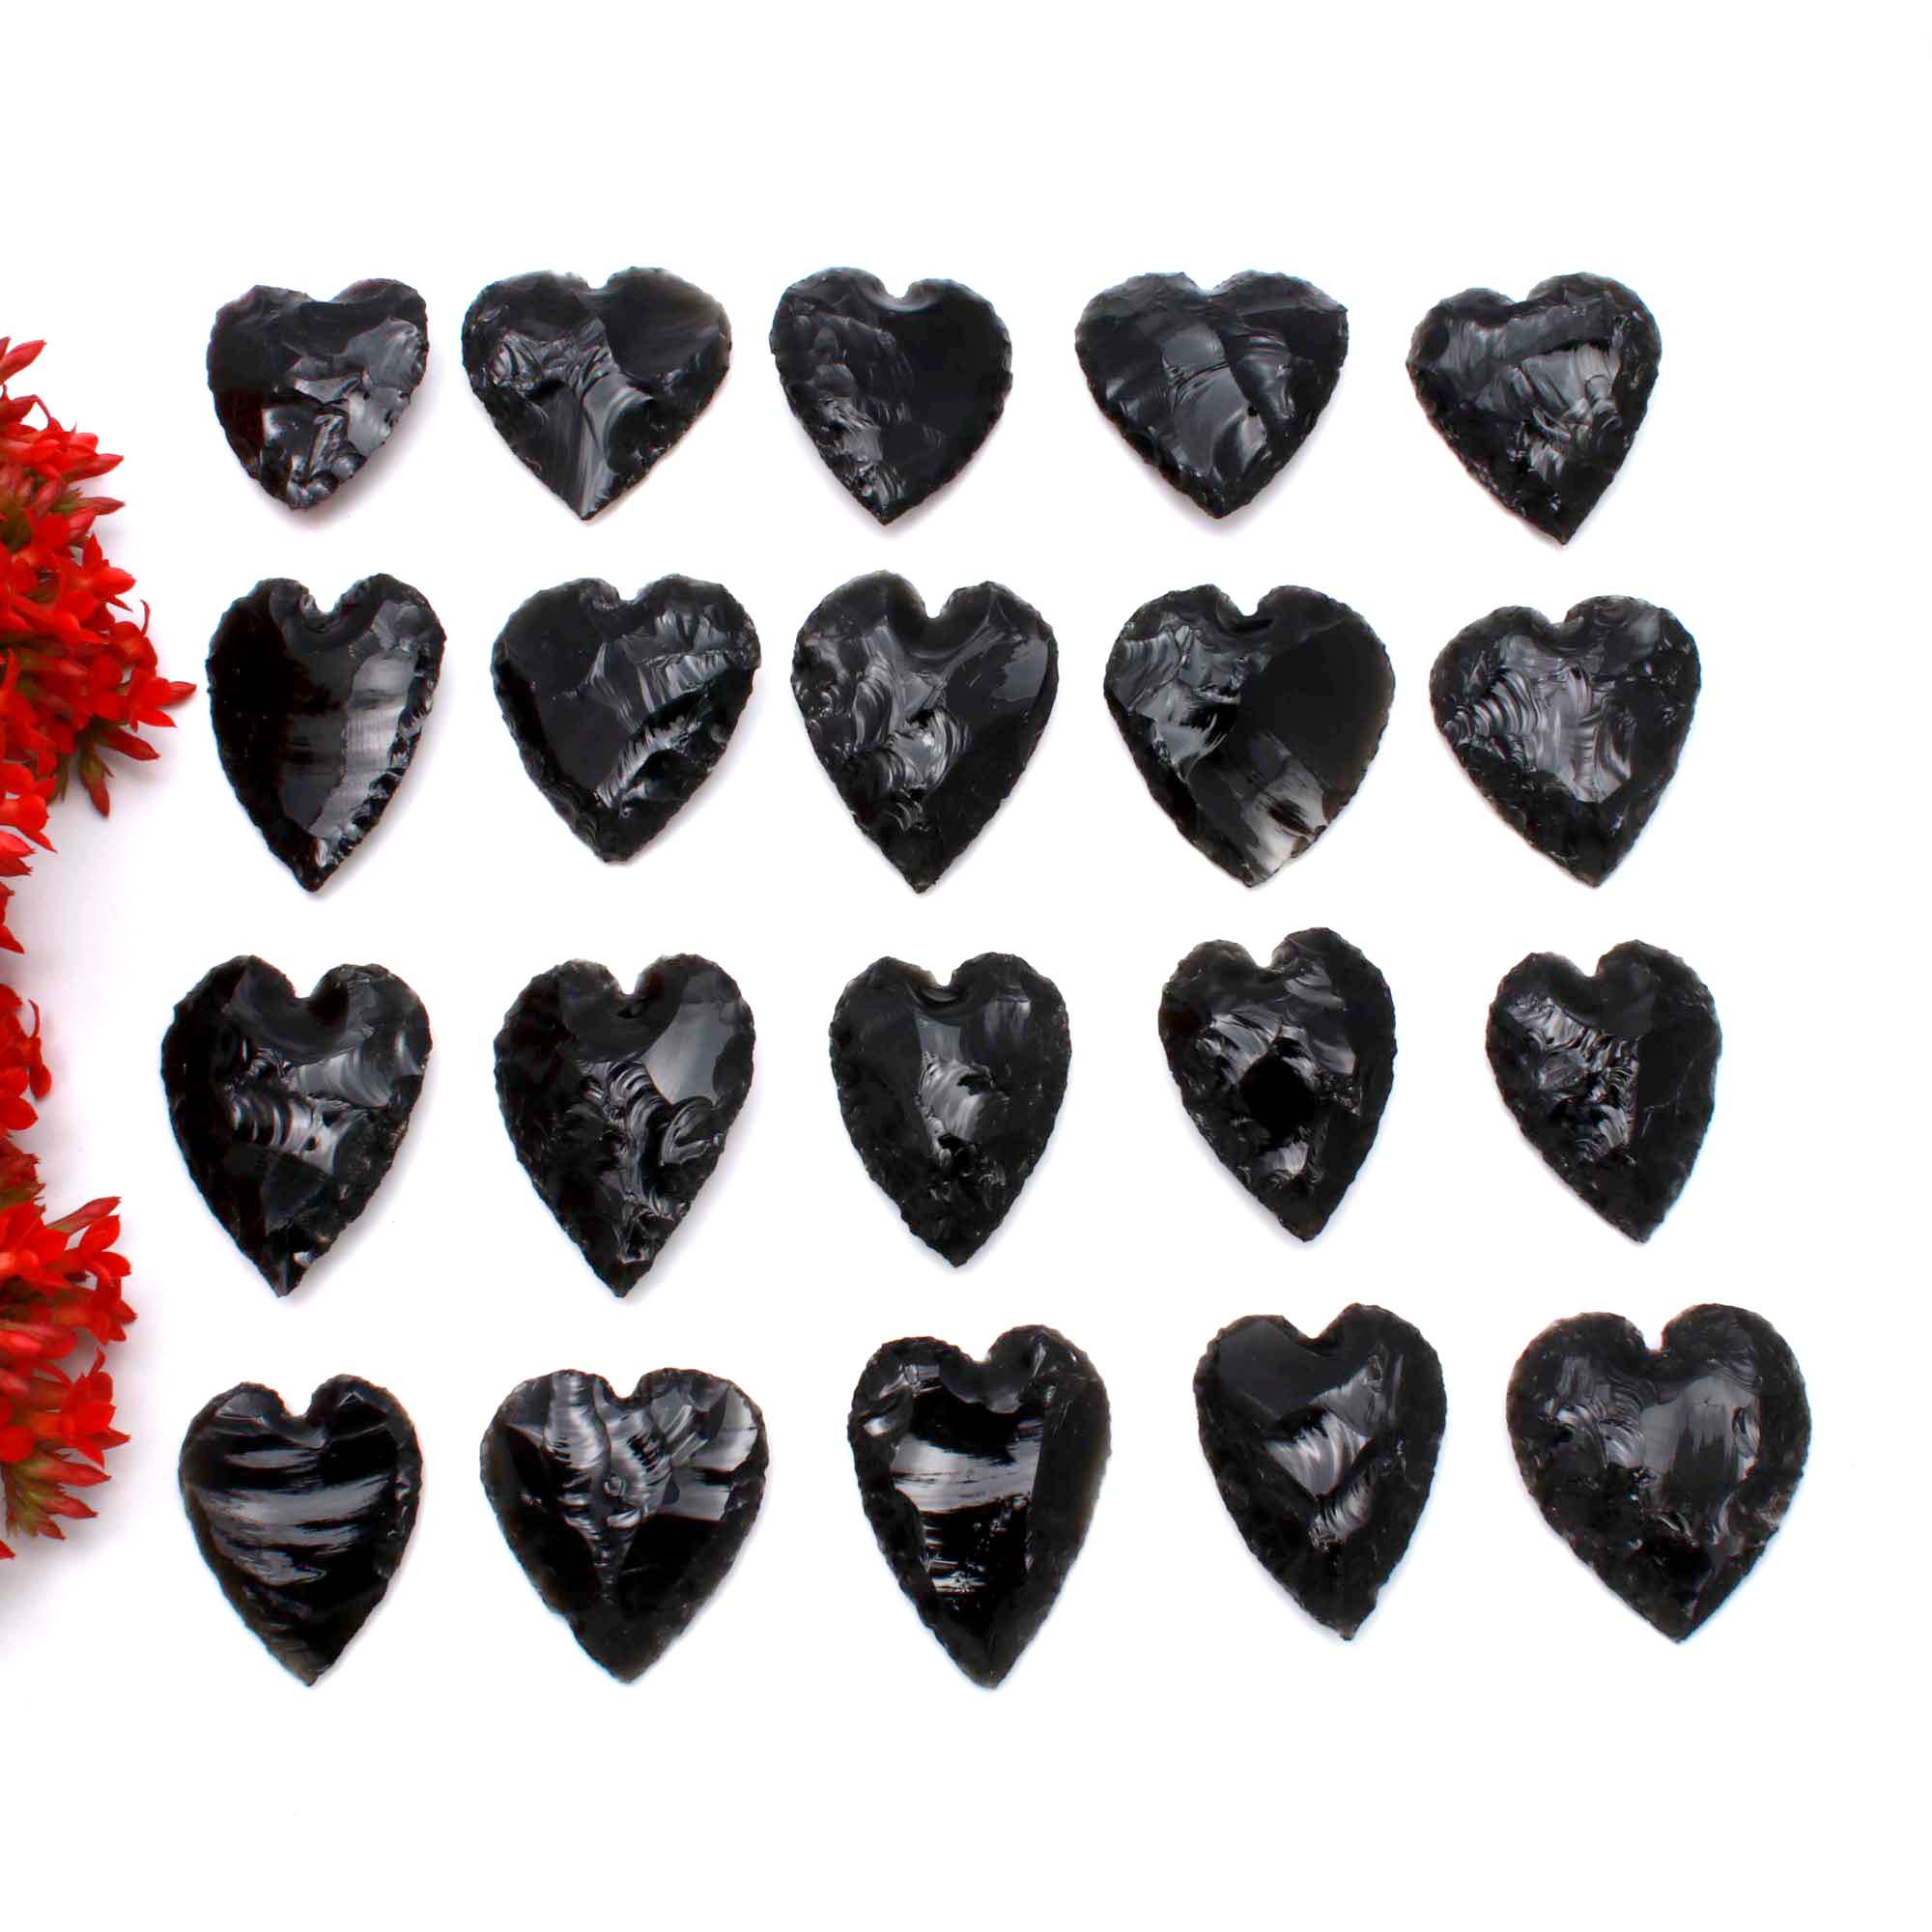 Black Obsidian Heart Carving